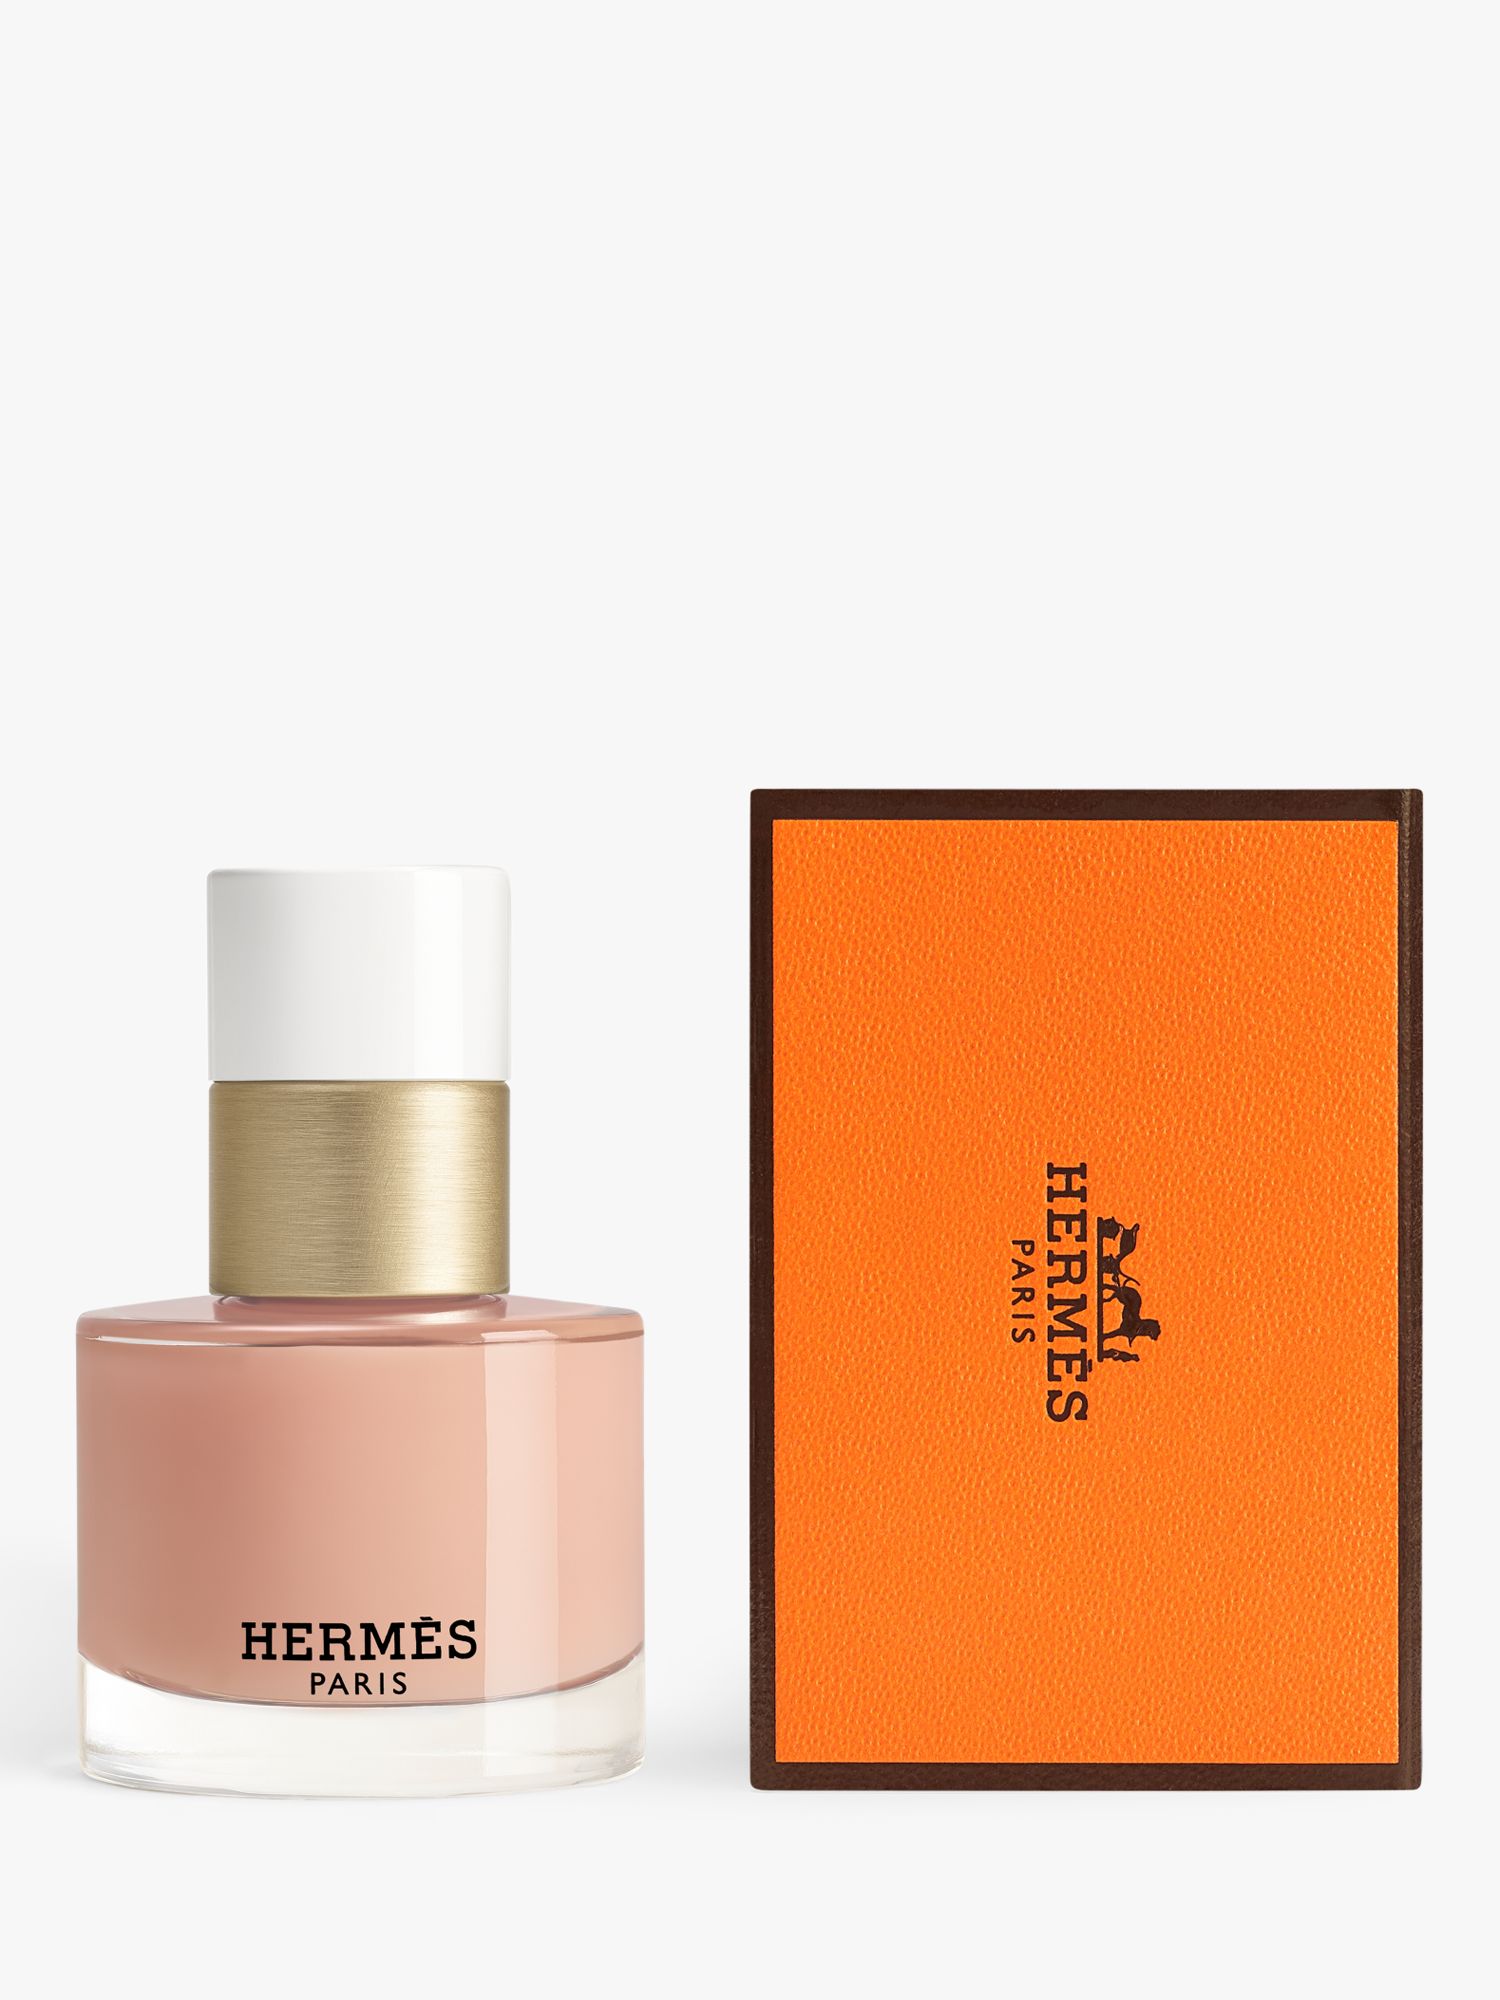 Hermes 03 Rose Coquille Les Mains Hermès Nail Polish 15ml